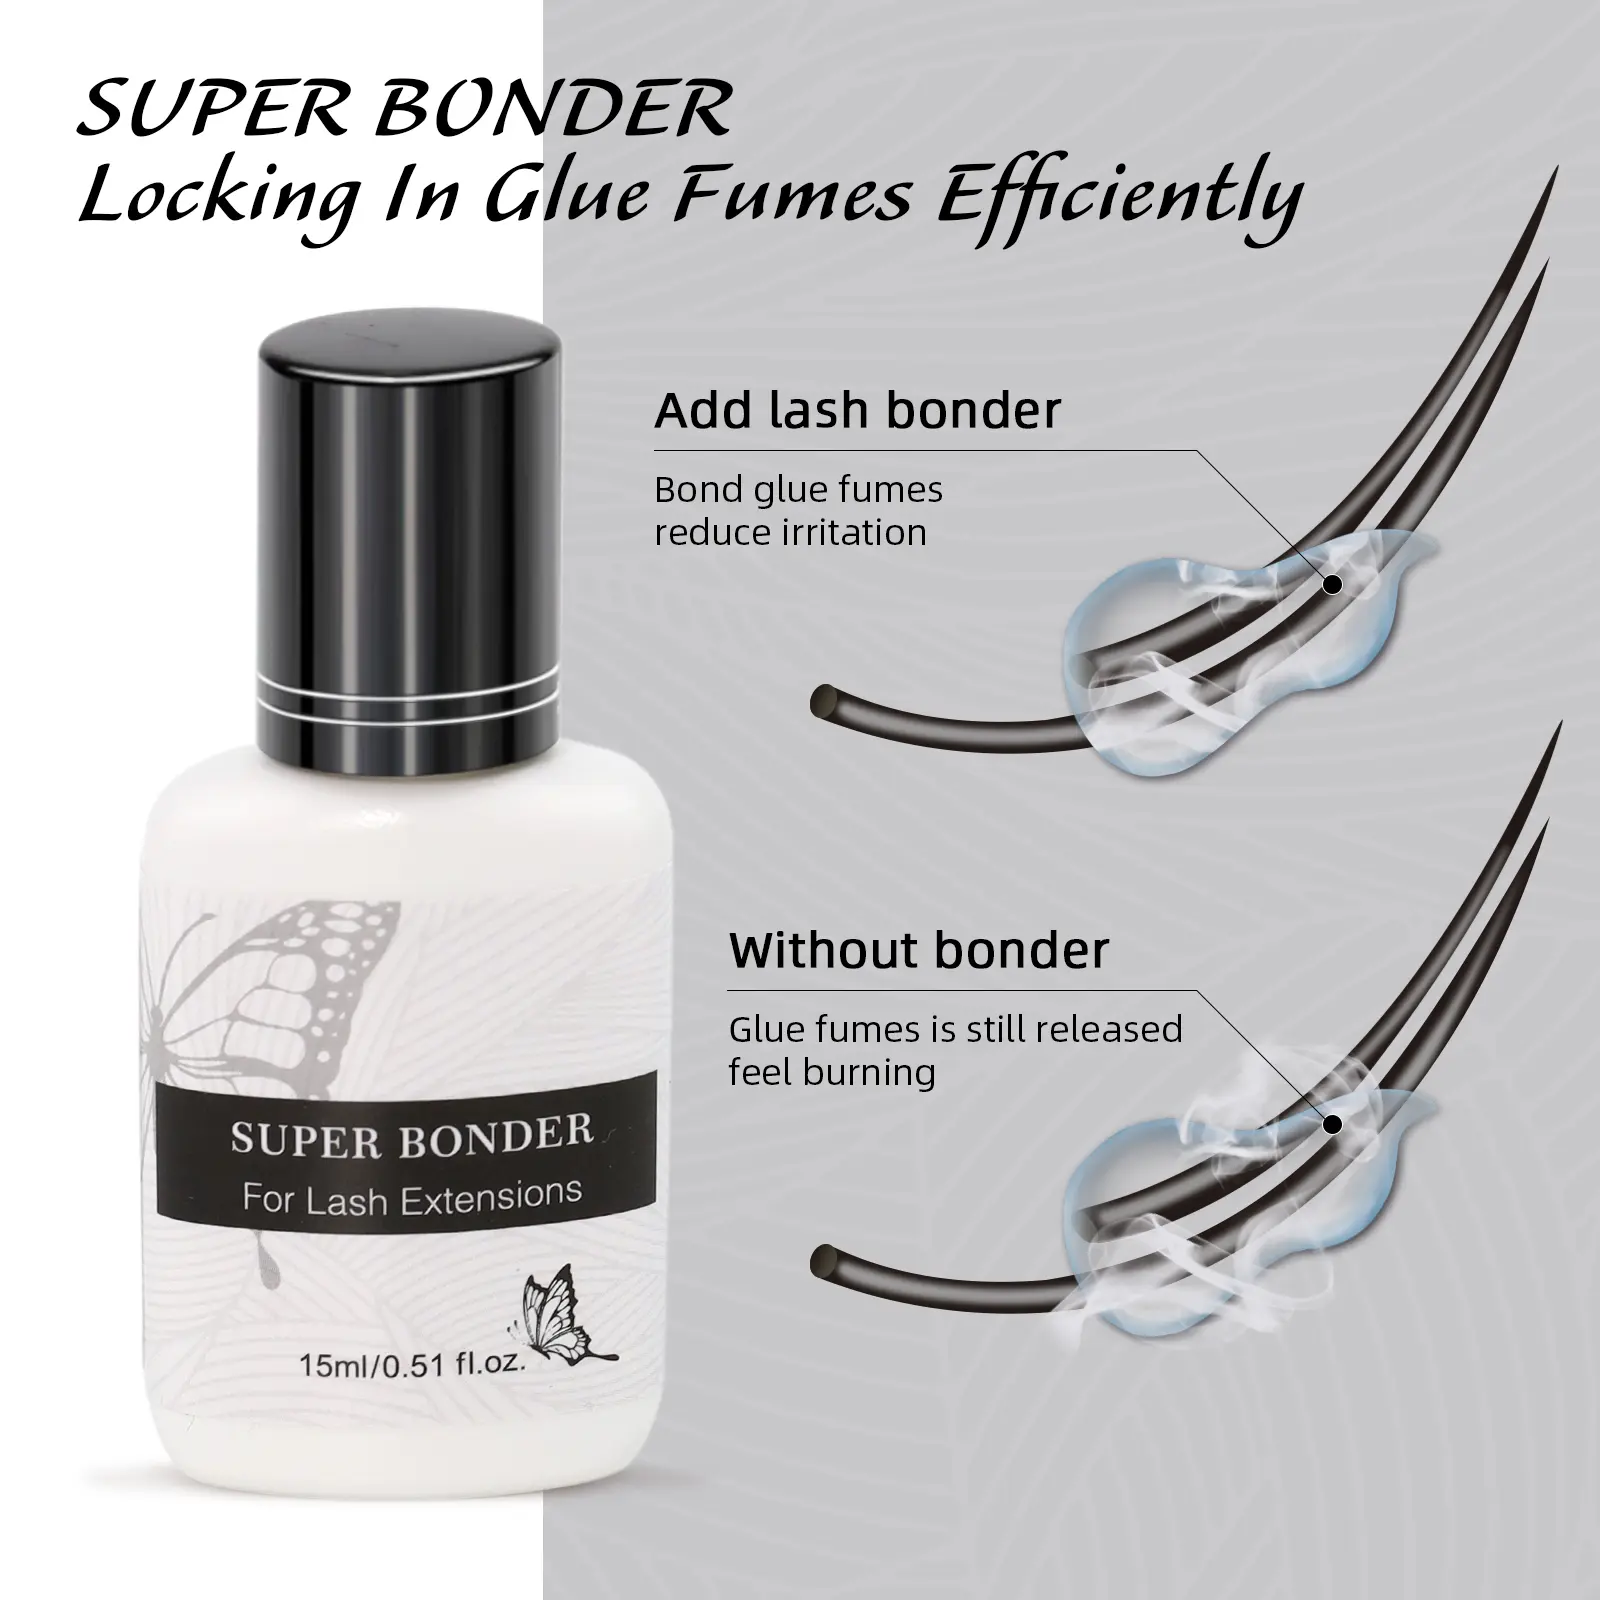 Lash bonder increase lashes retention time High quality  Reduce irritation Easy to use